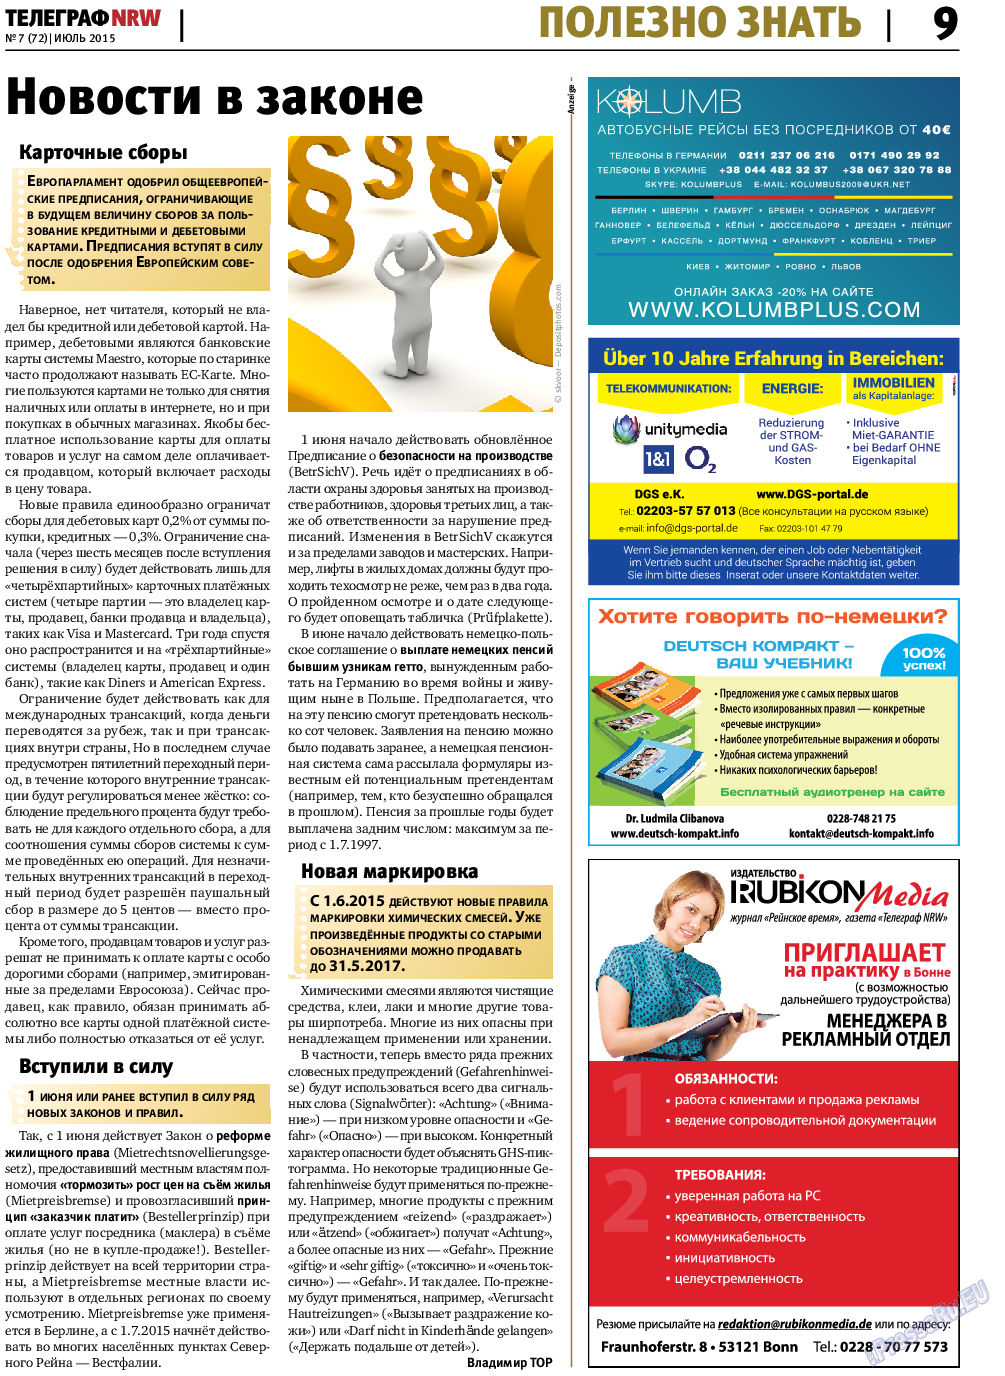 Телеграф NRW, газета. 2015 №7 стр.9